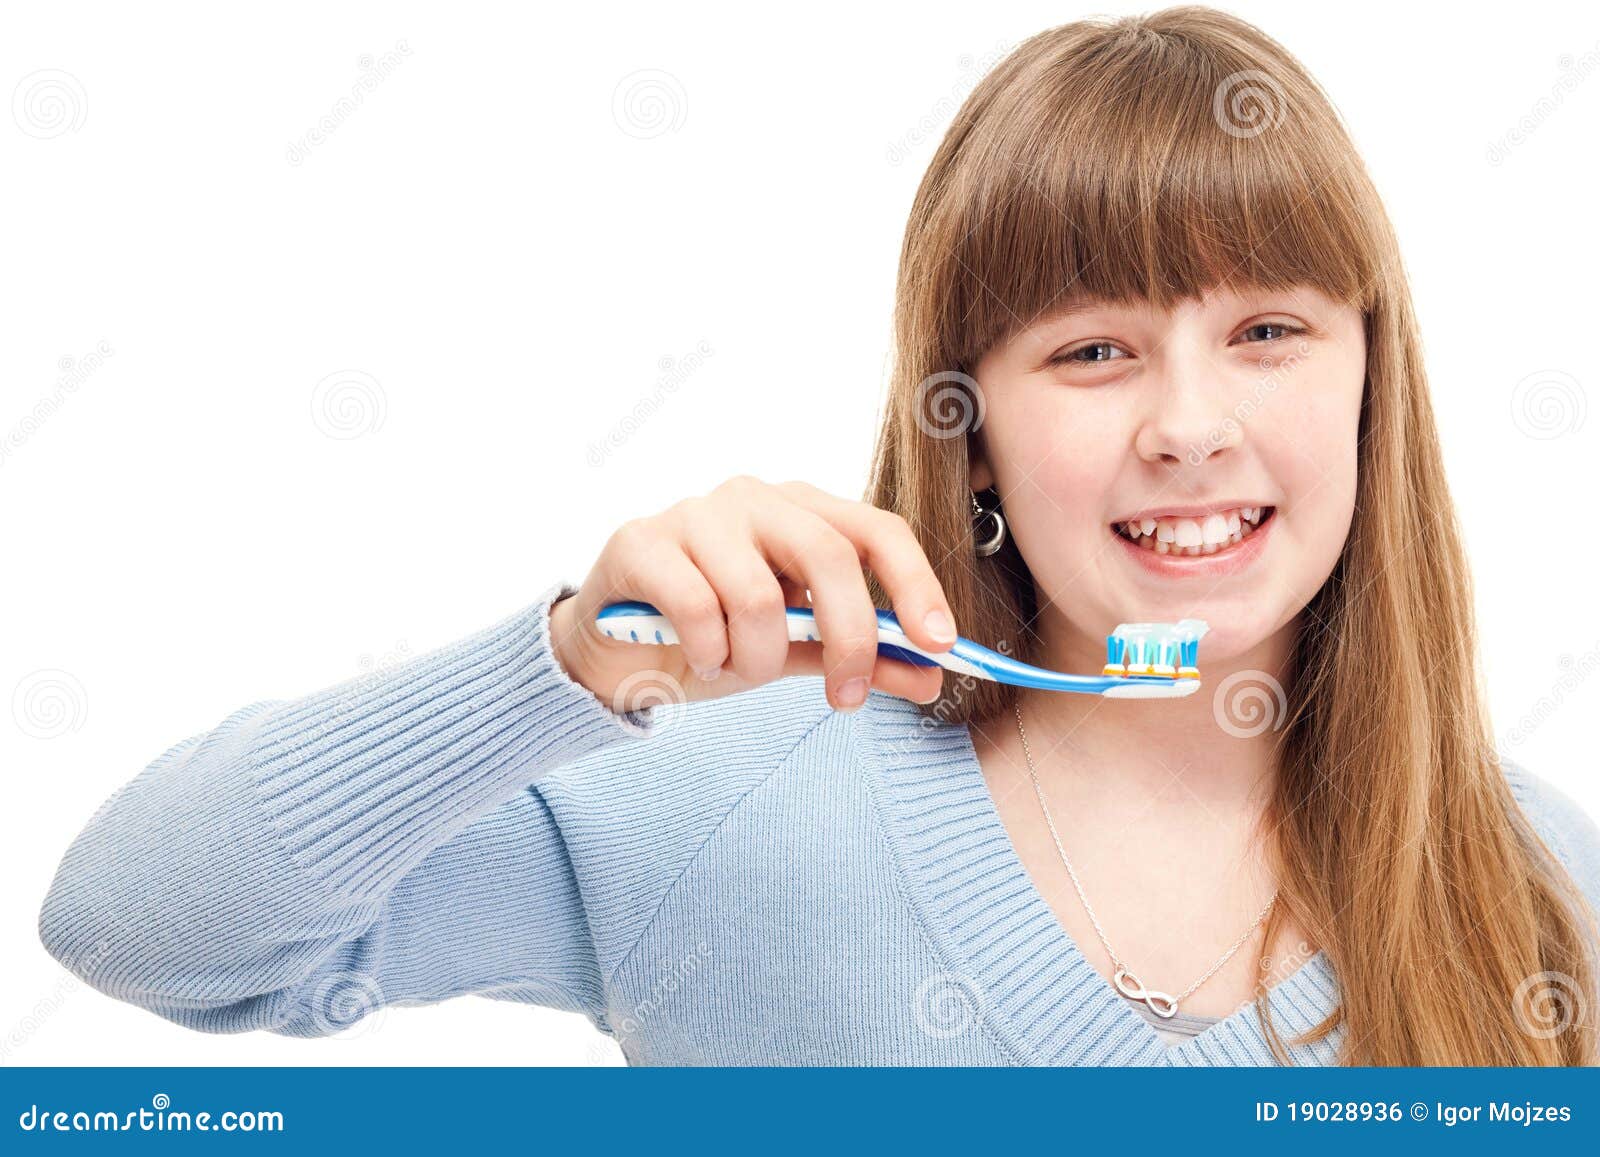 teenager brushing teeth